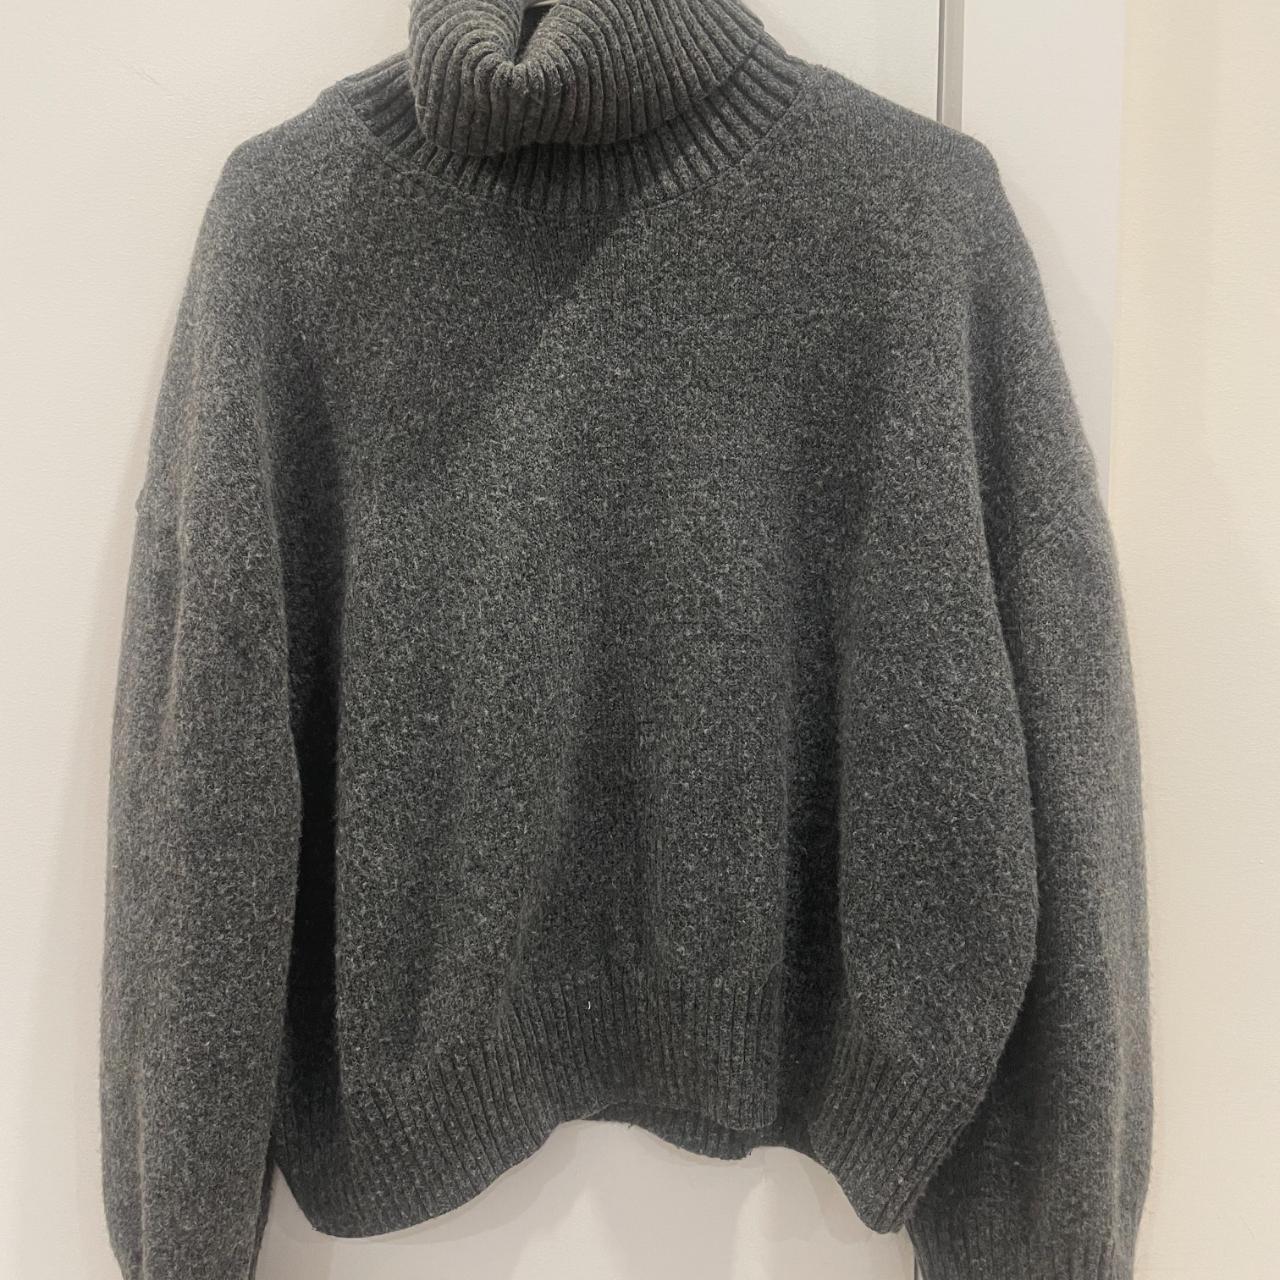 H&M Knitted Turtleneck Sweater (Grey) Size... - Depop